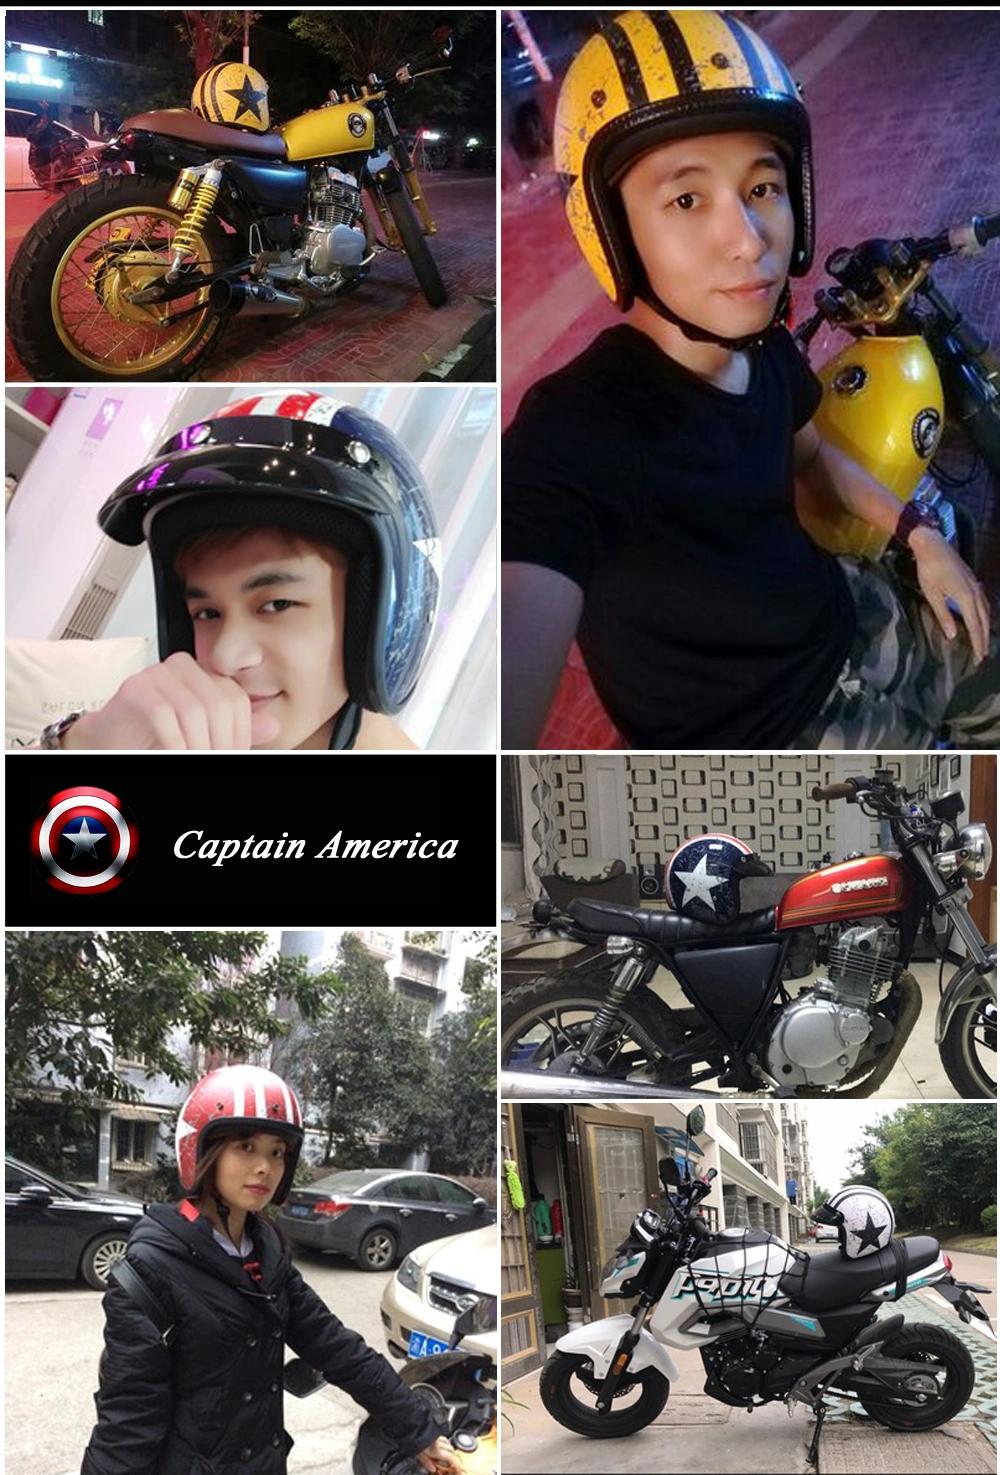 Motorcycle Helmet Jet Capacetes De Motociclista Vespa Cascos PARA Moto Cafe Racer Open Face